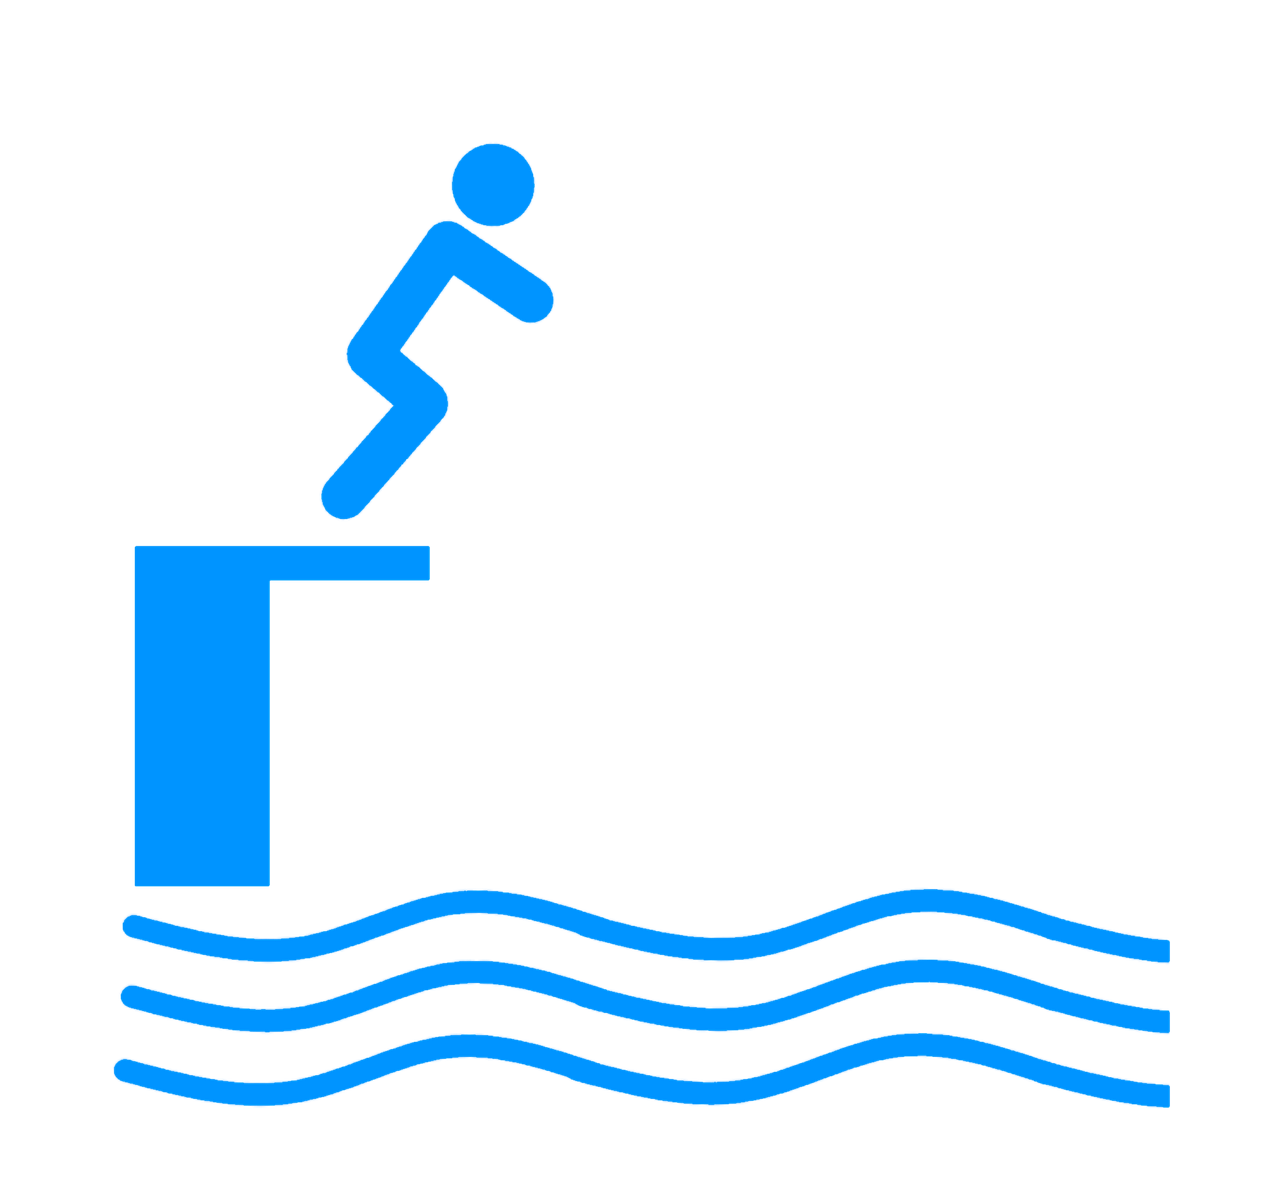 diving board